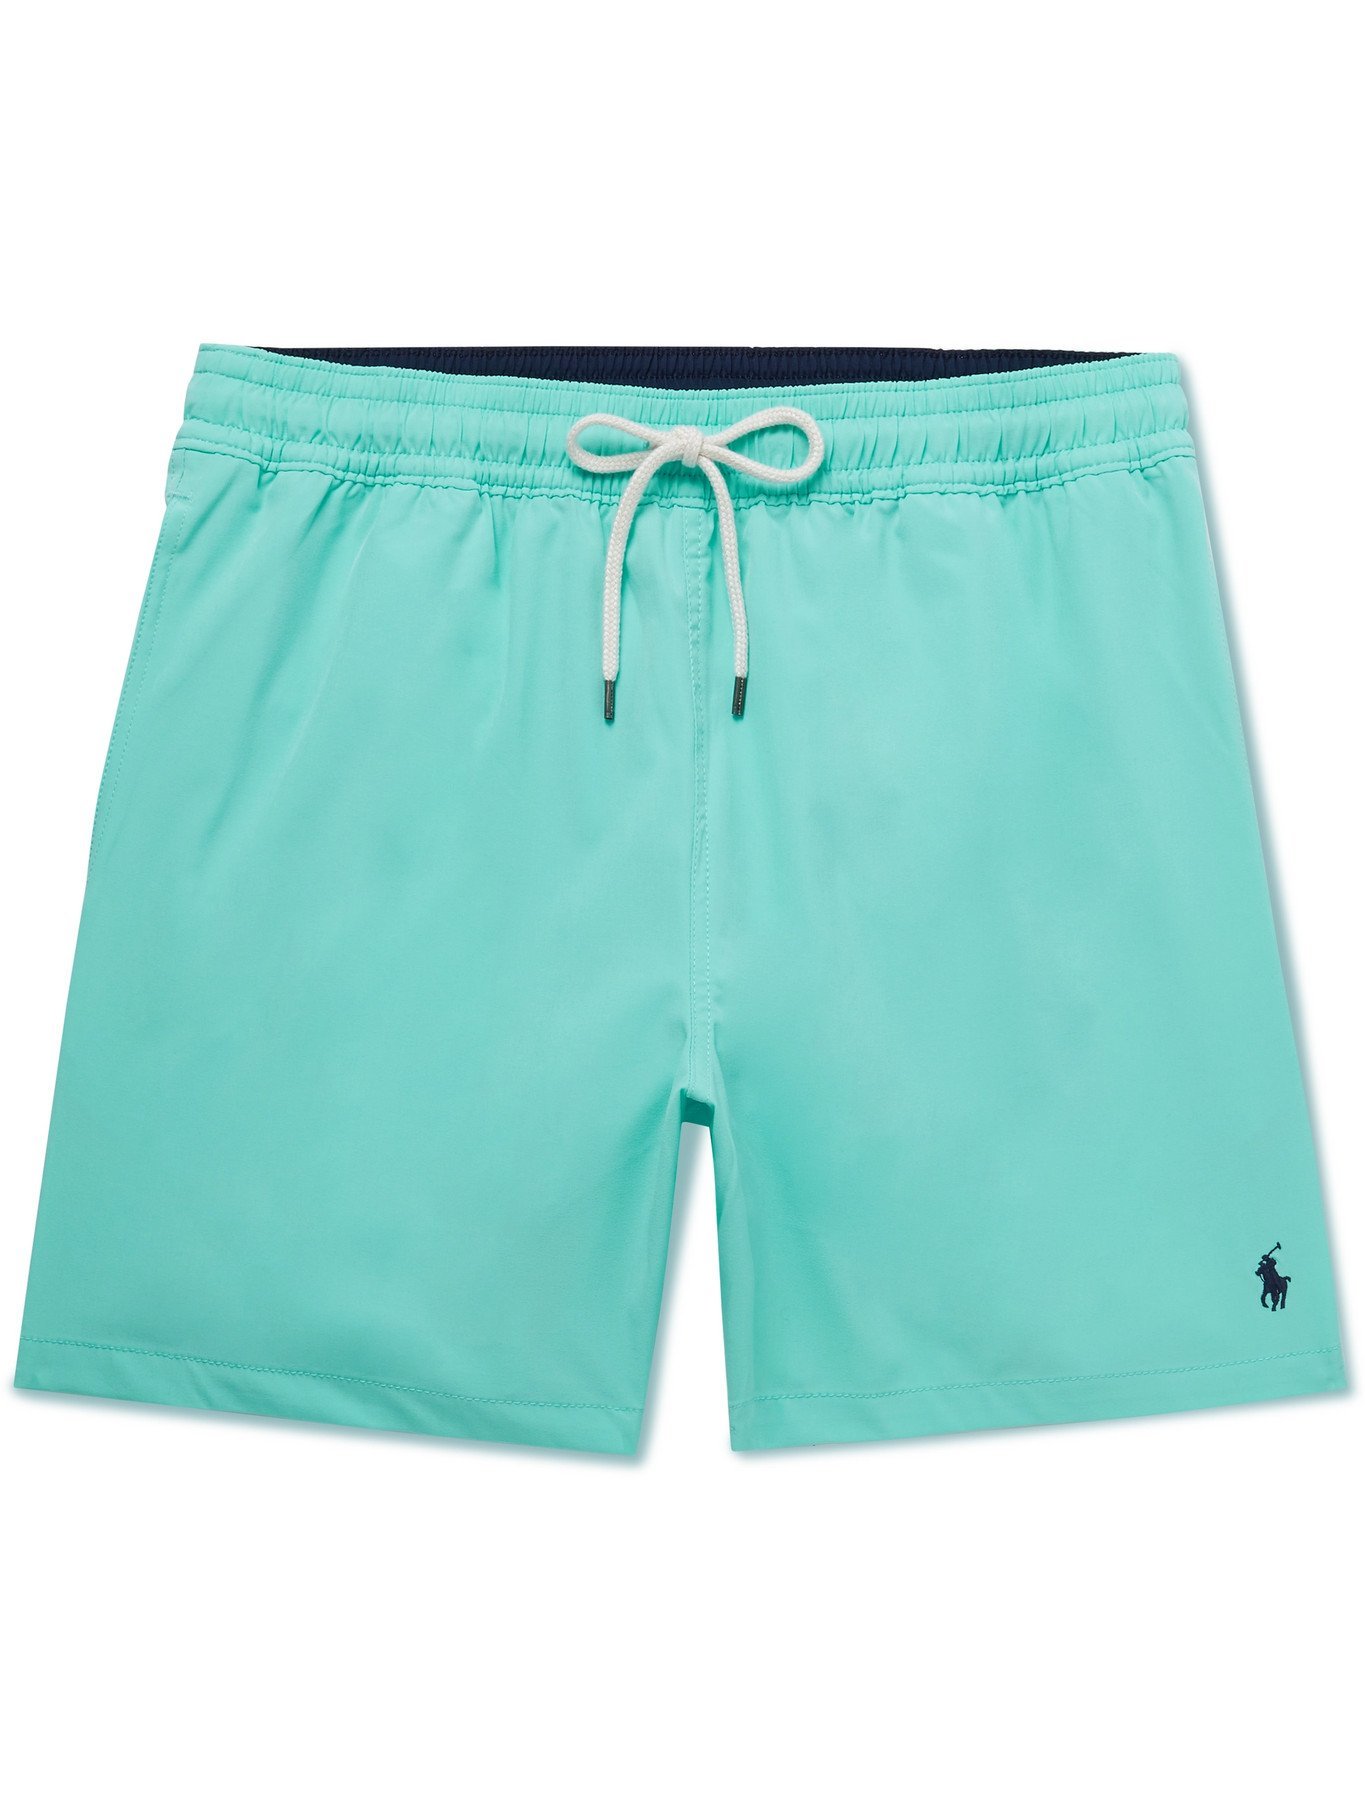 POLO RALPH LAUREN - Traveler Mid-Length Swim Shorts - Blue - S Polo Ralph  Lauren